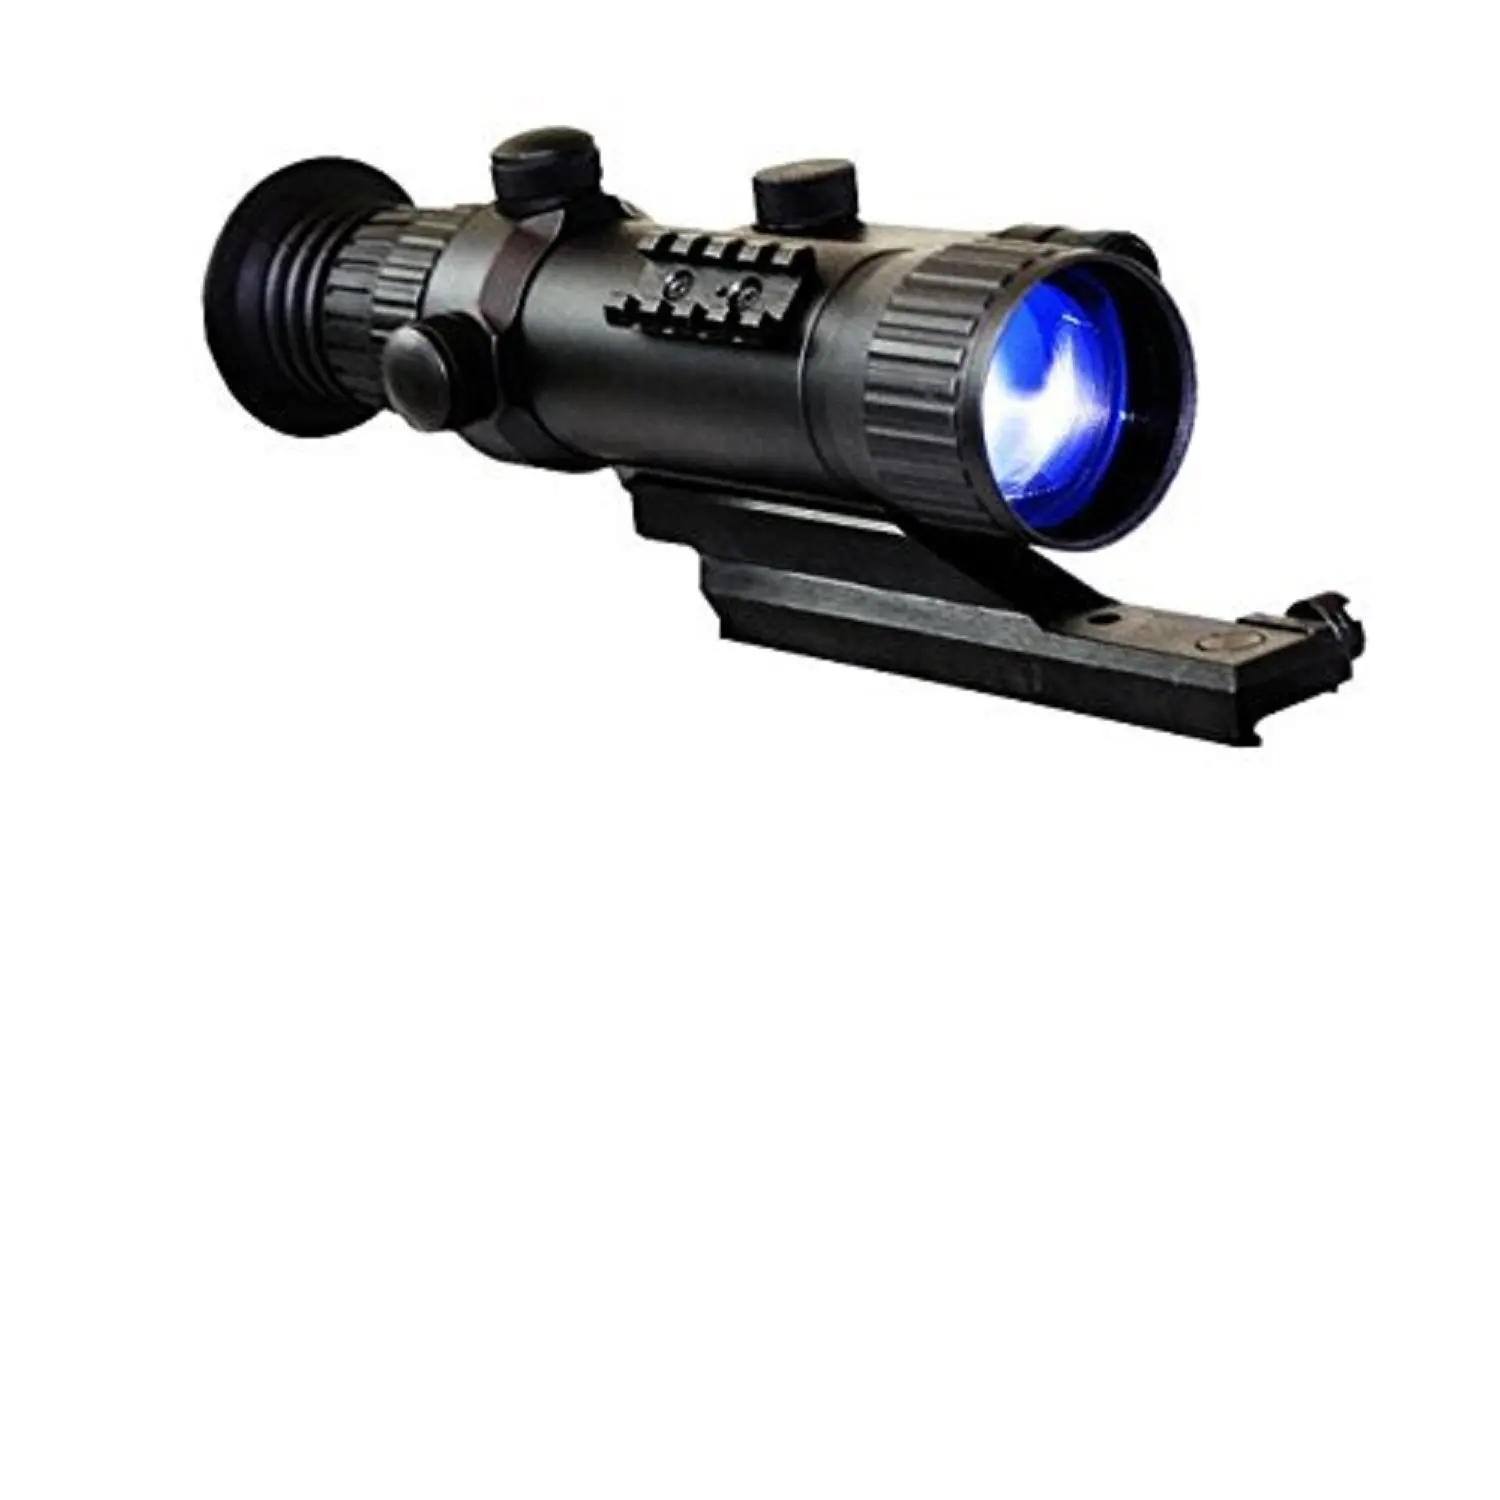 Buy Bering Optics PVS-14BE Gen 3+ Elite Night Vision Monocular, Black